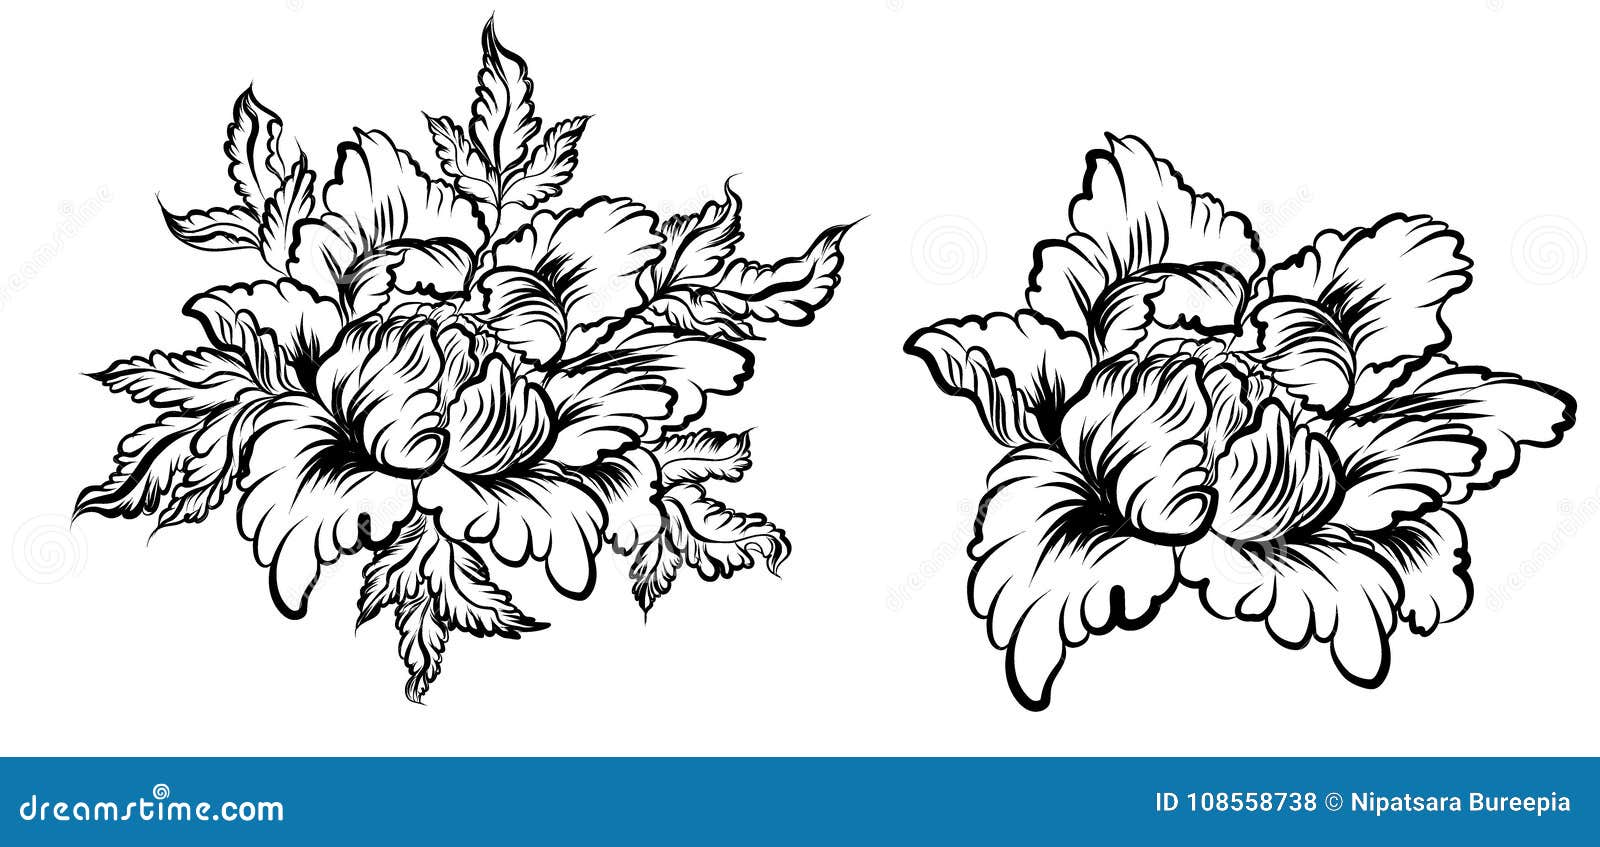 Hand Drawn Peony FlowerChinese Flower Vector TattooDoodle Art